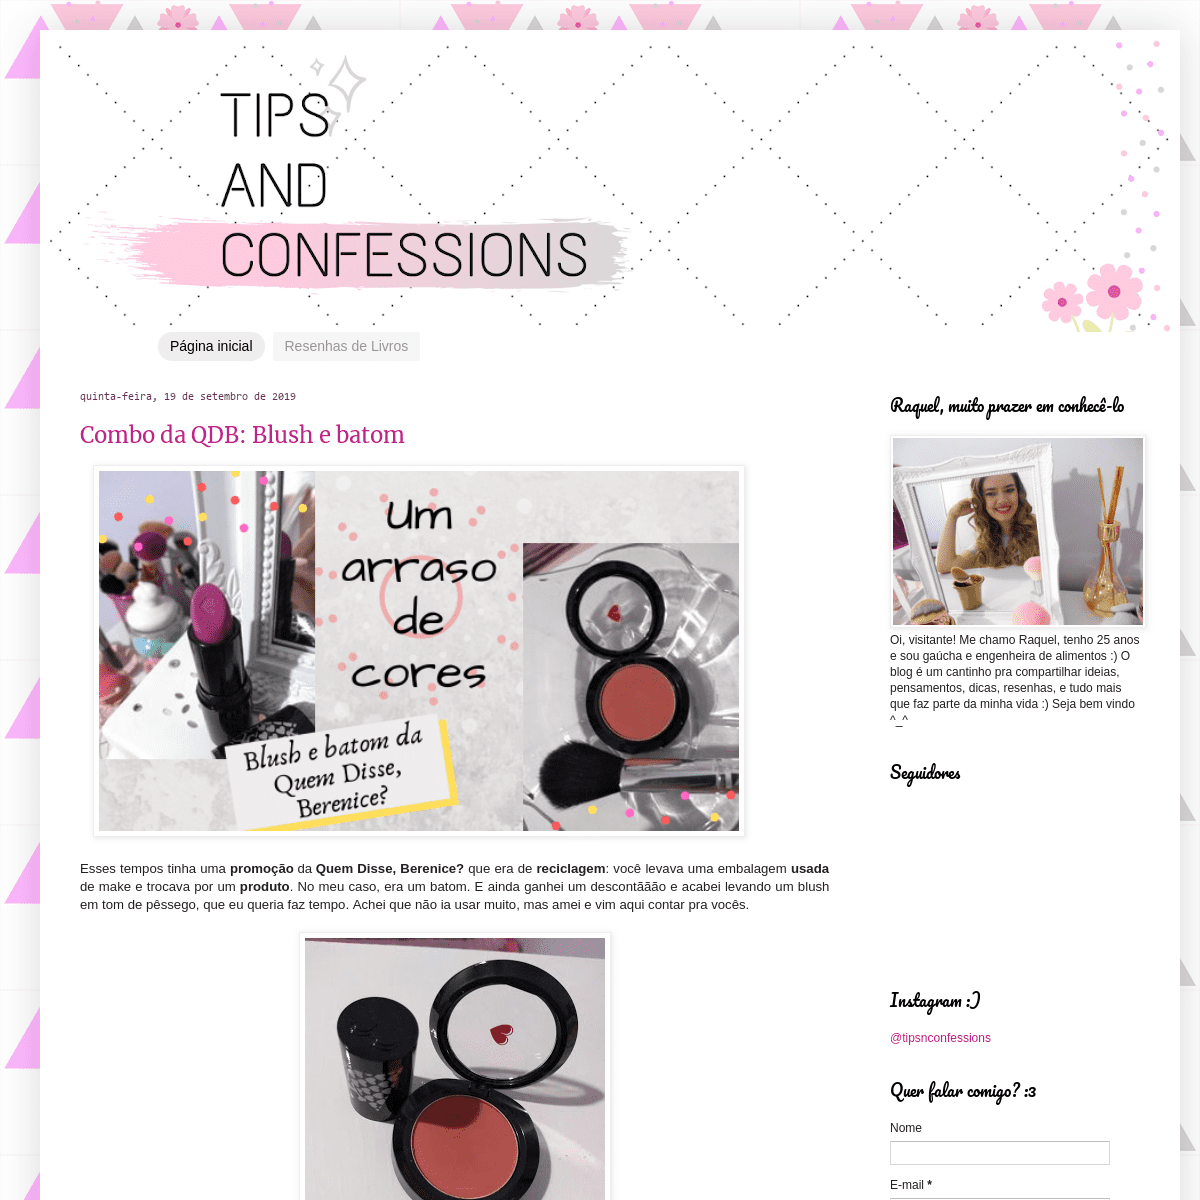 A complete backup of tipsnconfessions.blogspot.com